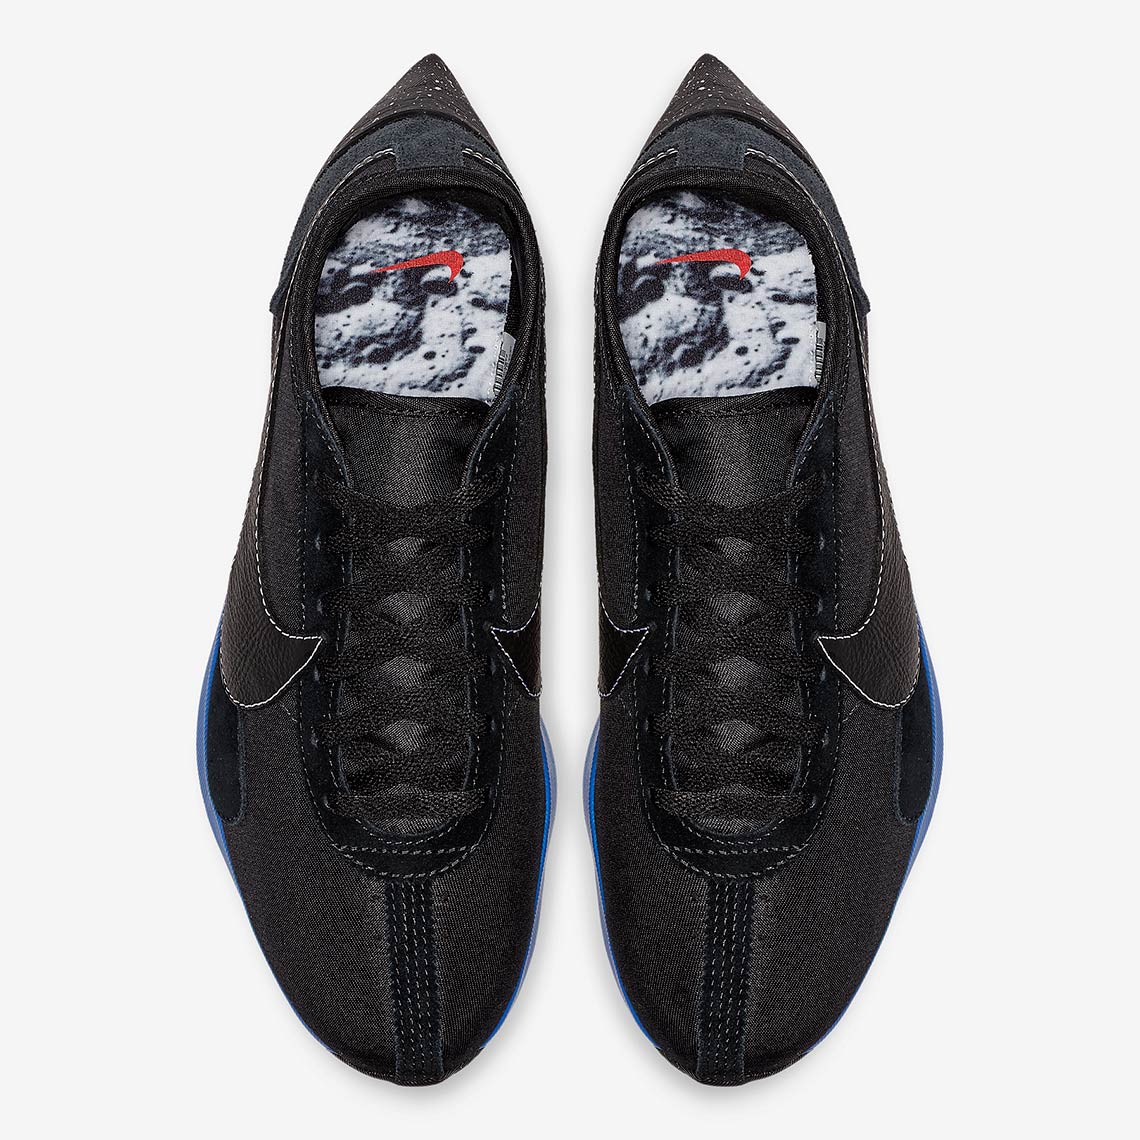 Nike Moon Racer November 2018 Release Date | SneakerNews.com